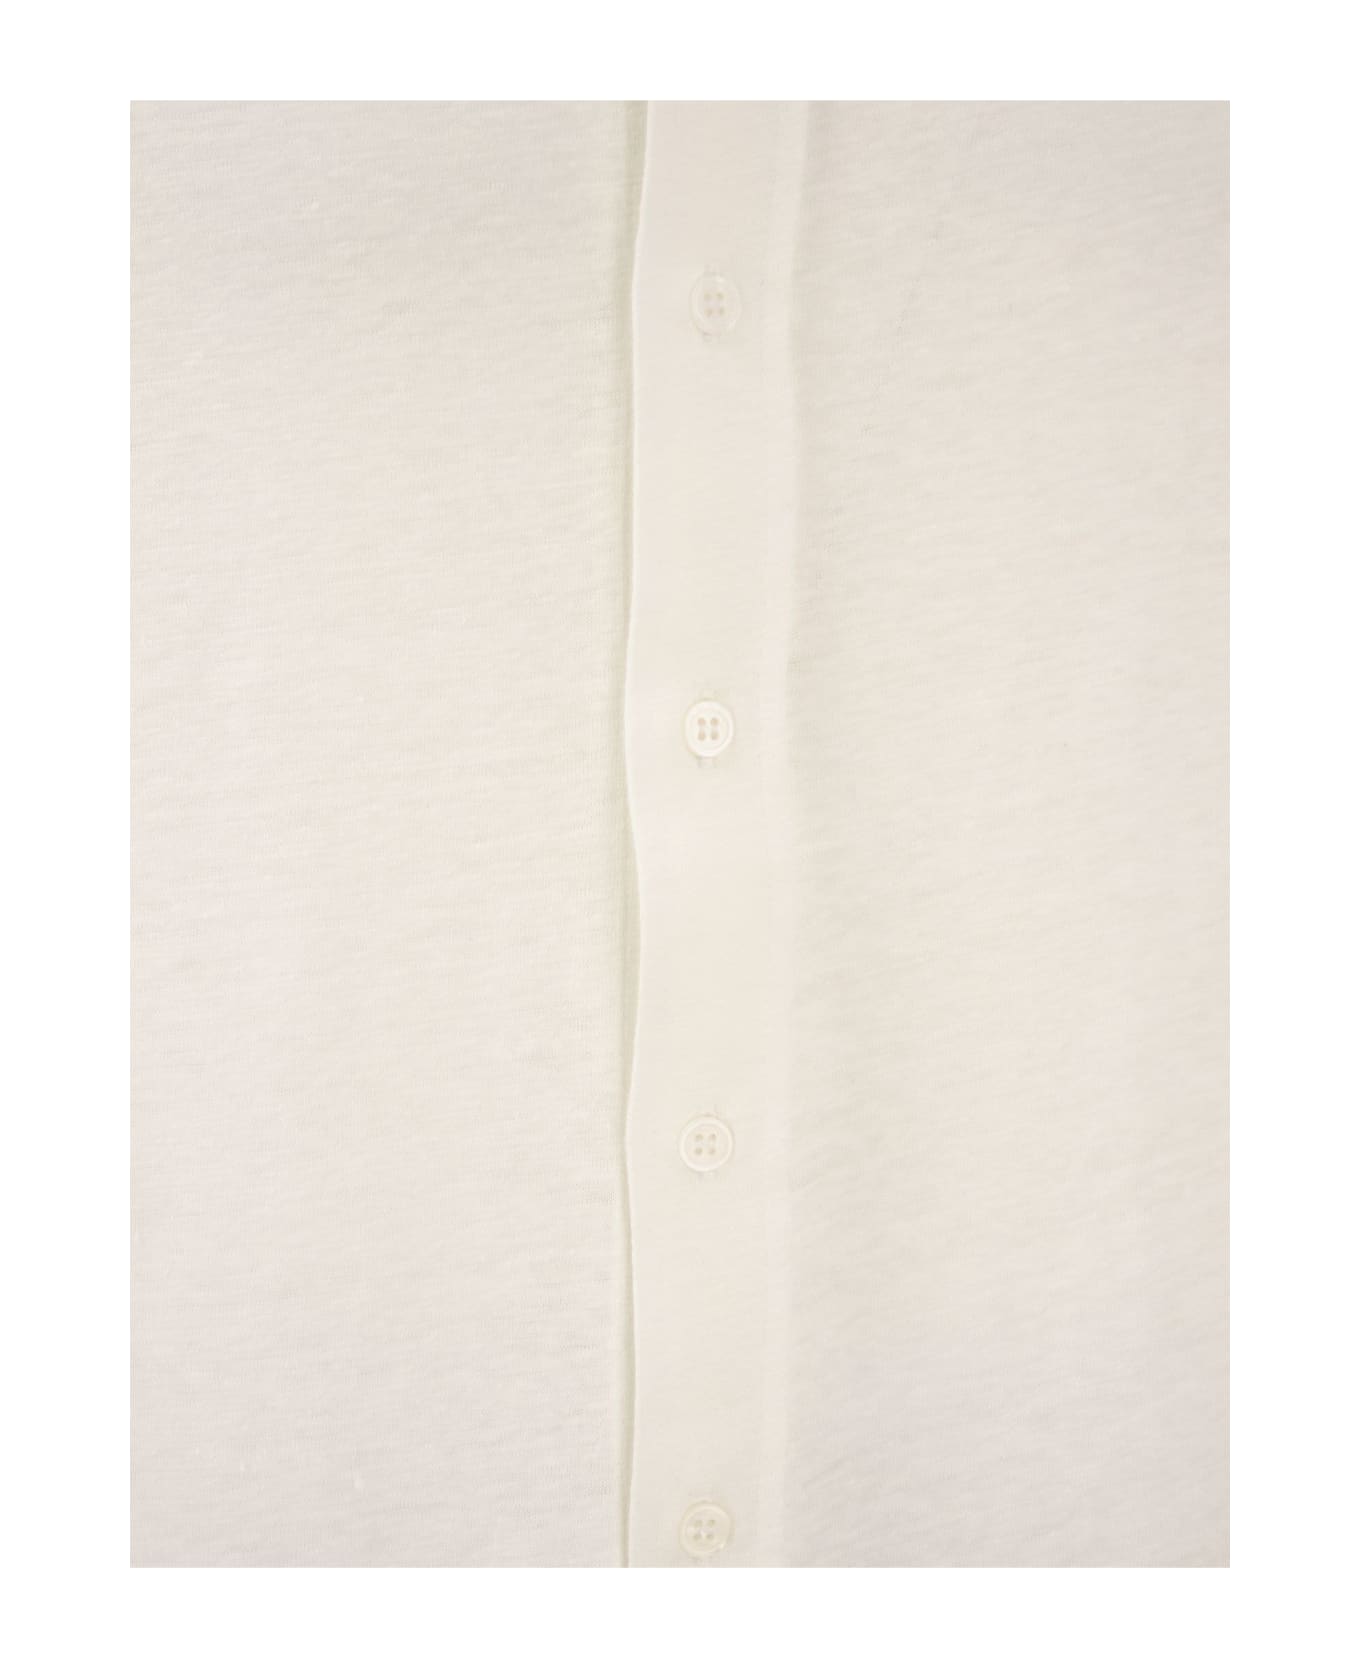 Majestic Filatures Linen Long-sleeved Shirt - White